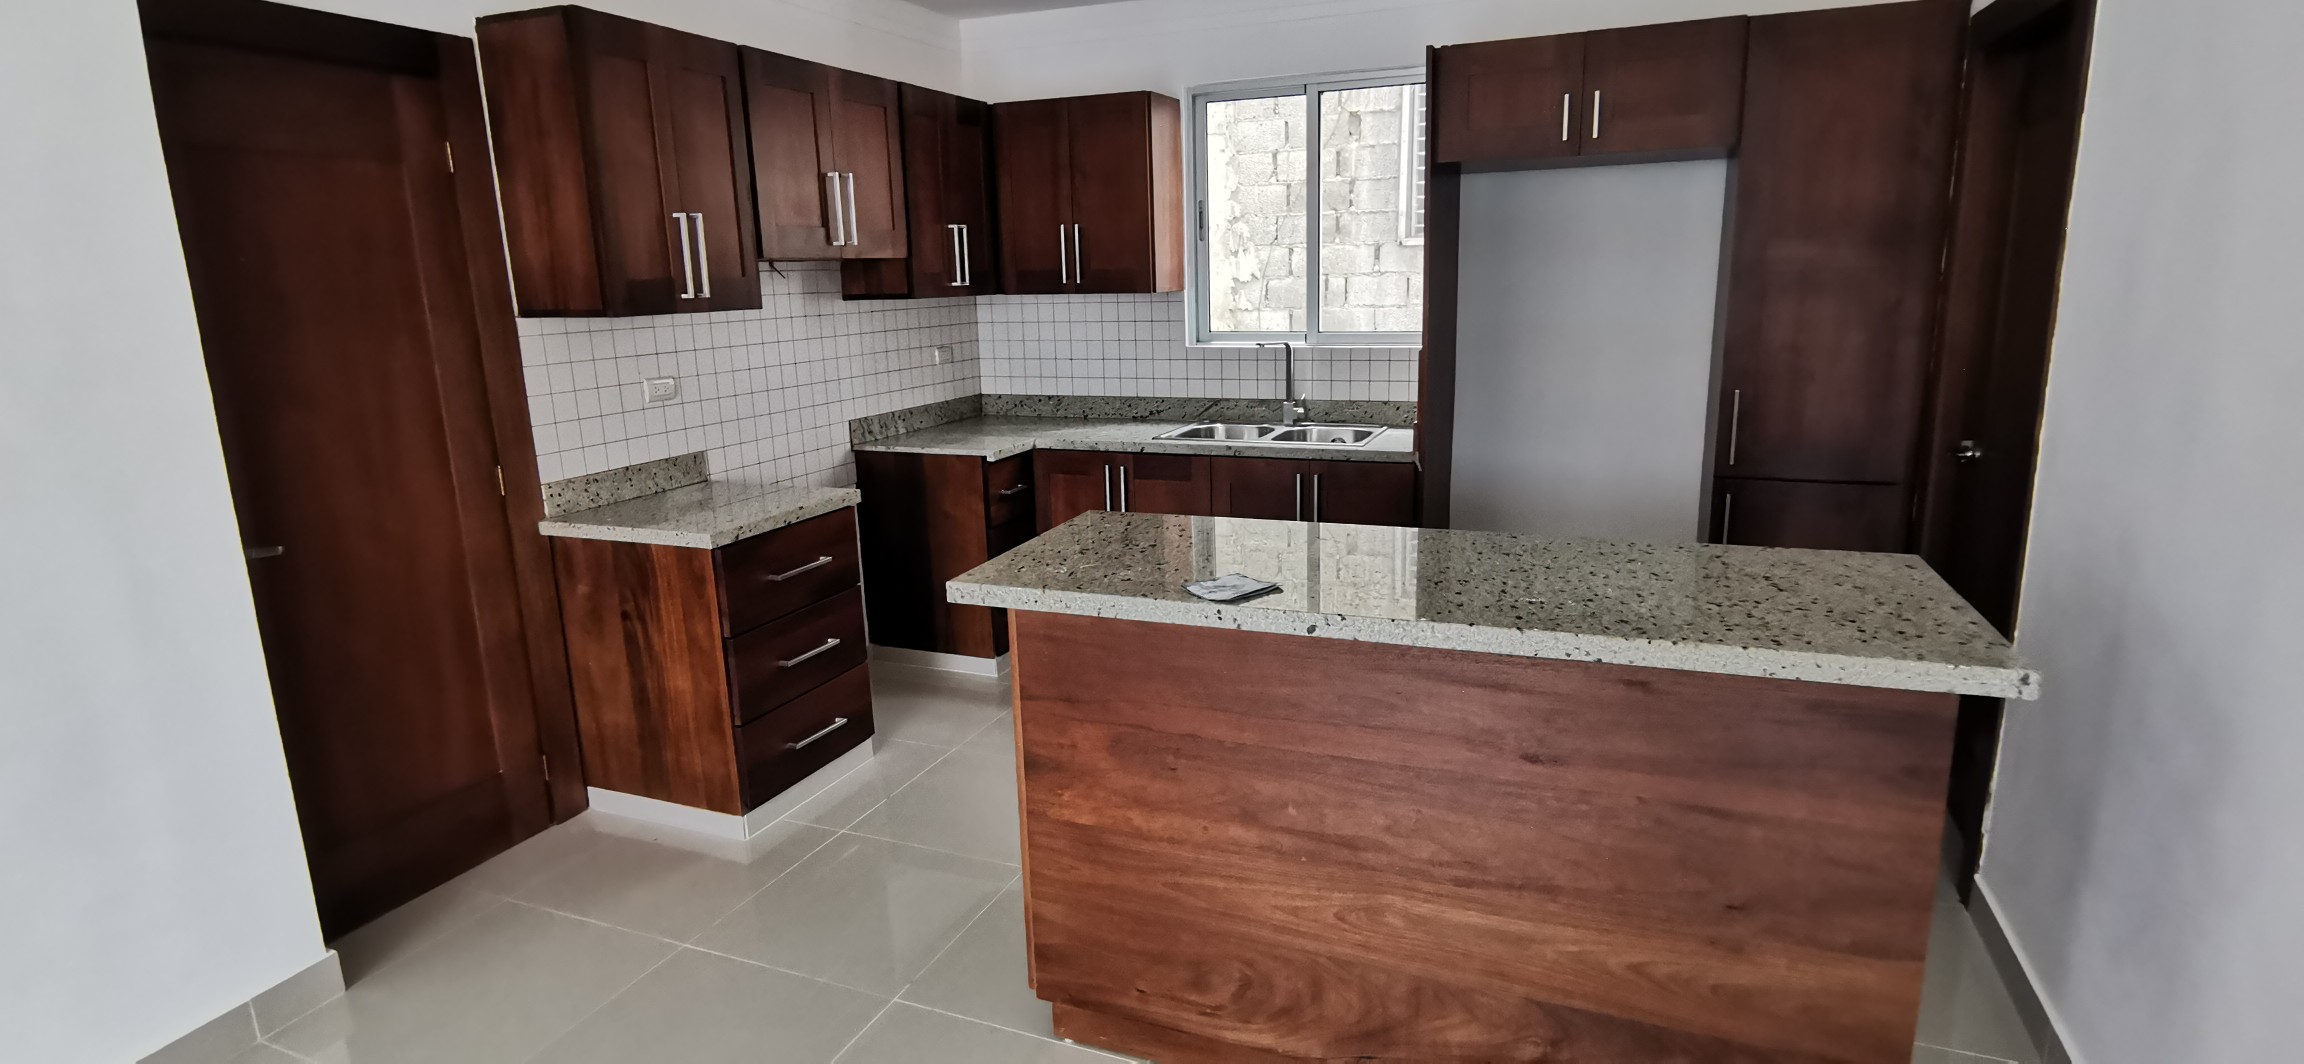 apartamentos - Rento apart 2do nivel nuevo a 2 minutos de plaza hache santiago 